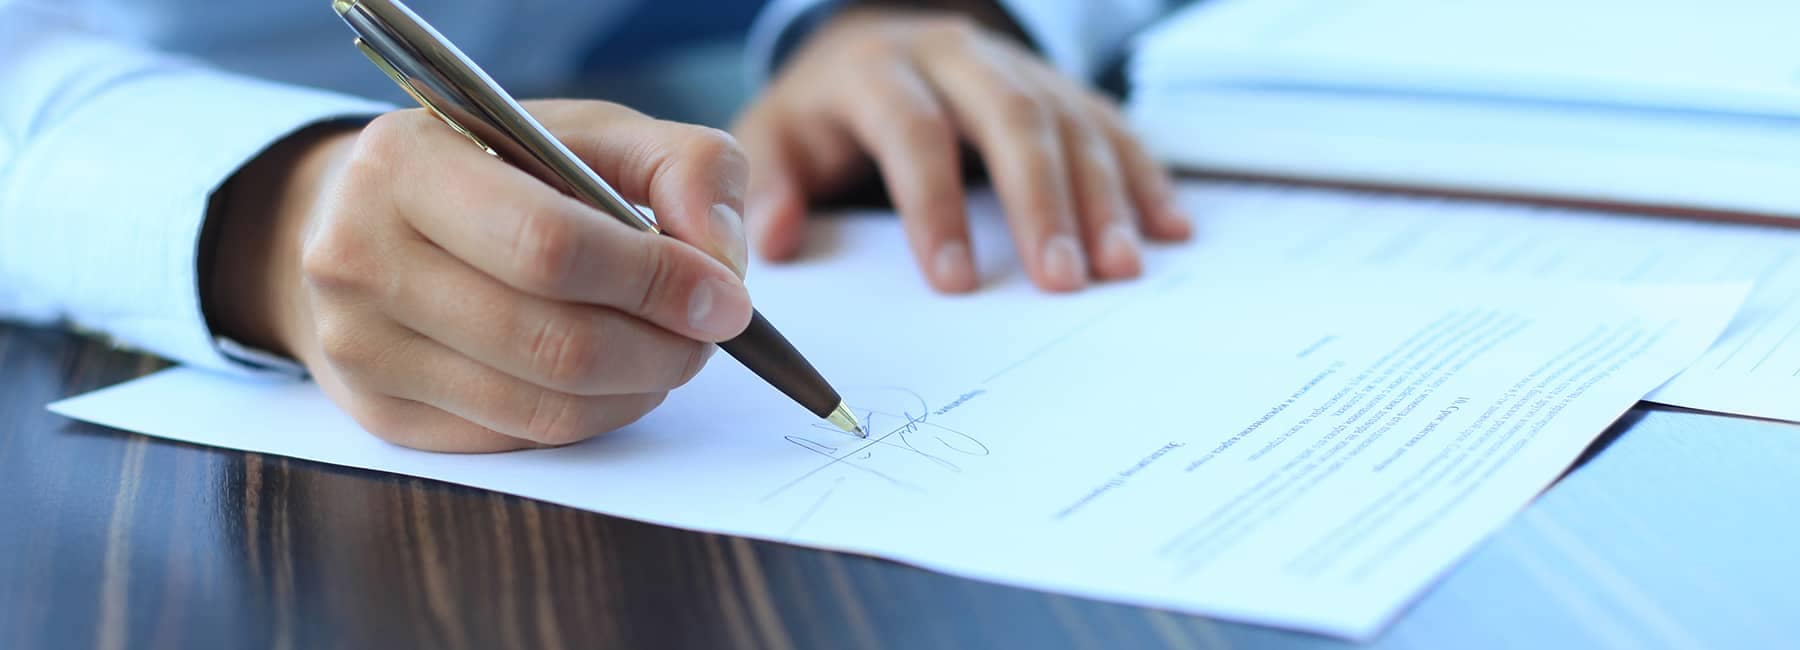 Sales rep signing paperwork at a car dealership